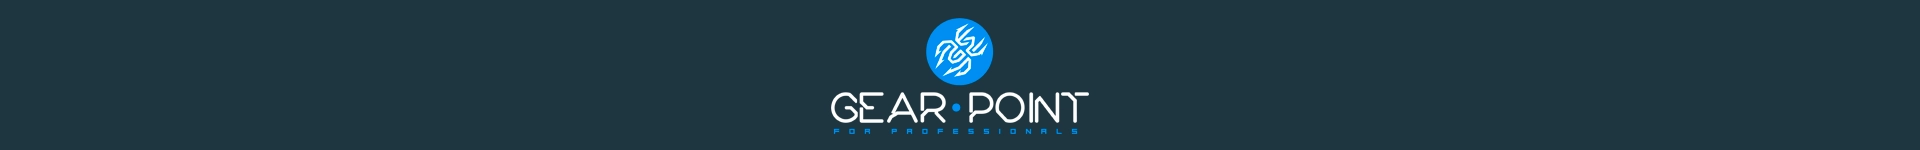 Gear Point | Gear for Professionals BVs achtergrond